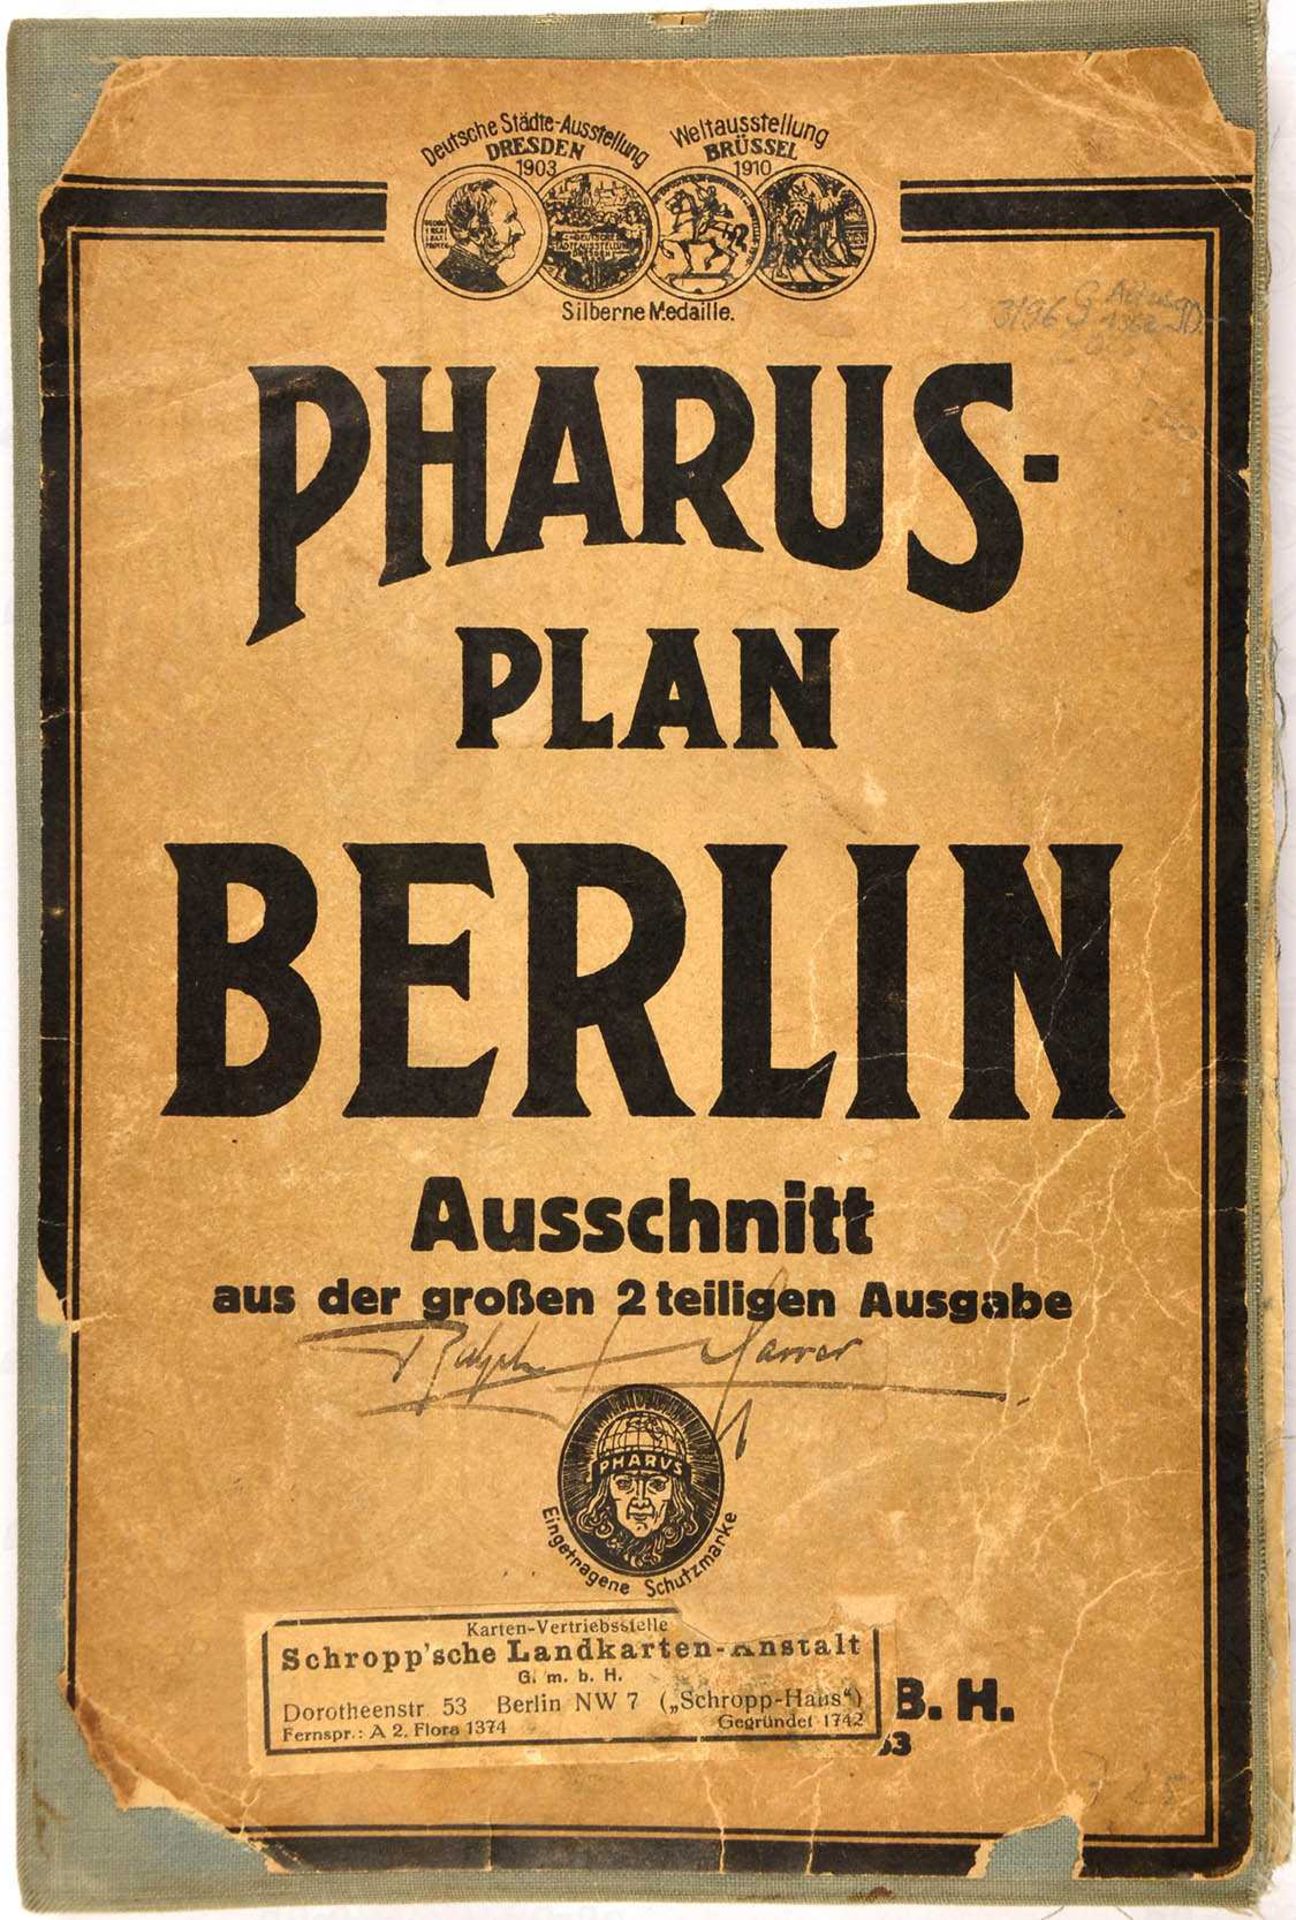 PHARUS-PLAN BERLIN, um 1930, "Ausschnitt aus der großen 2teiligen Ausgabe", farb. gedr., a. Ln.